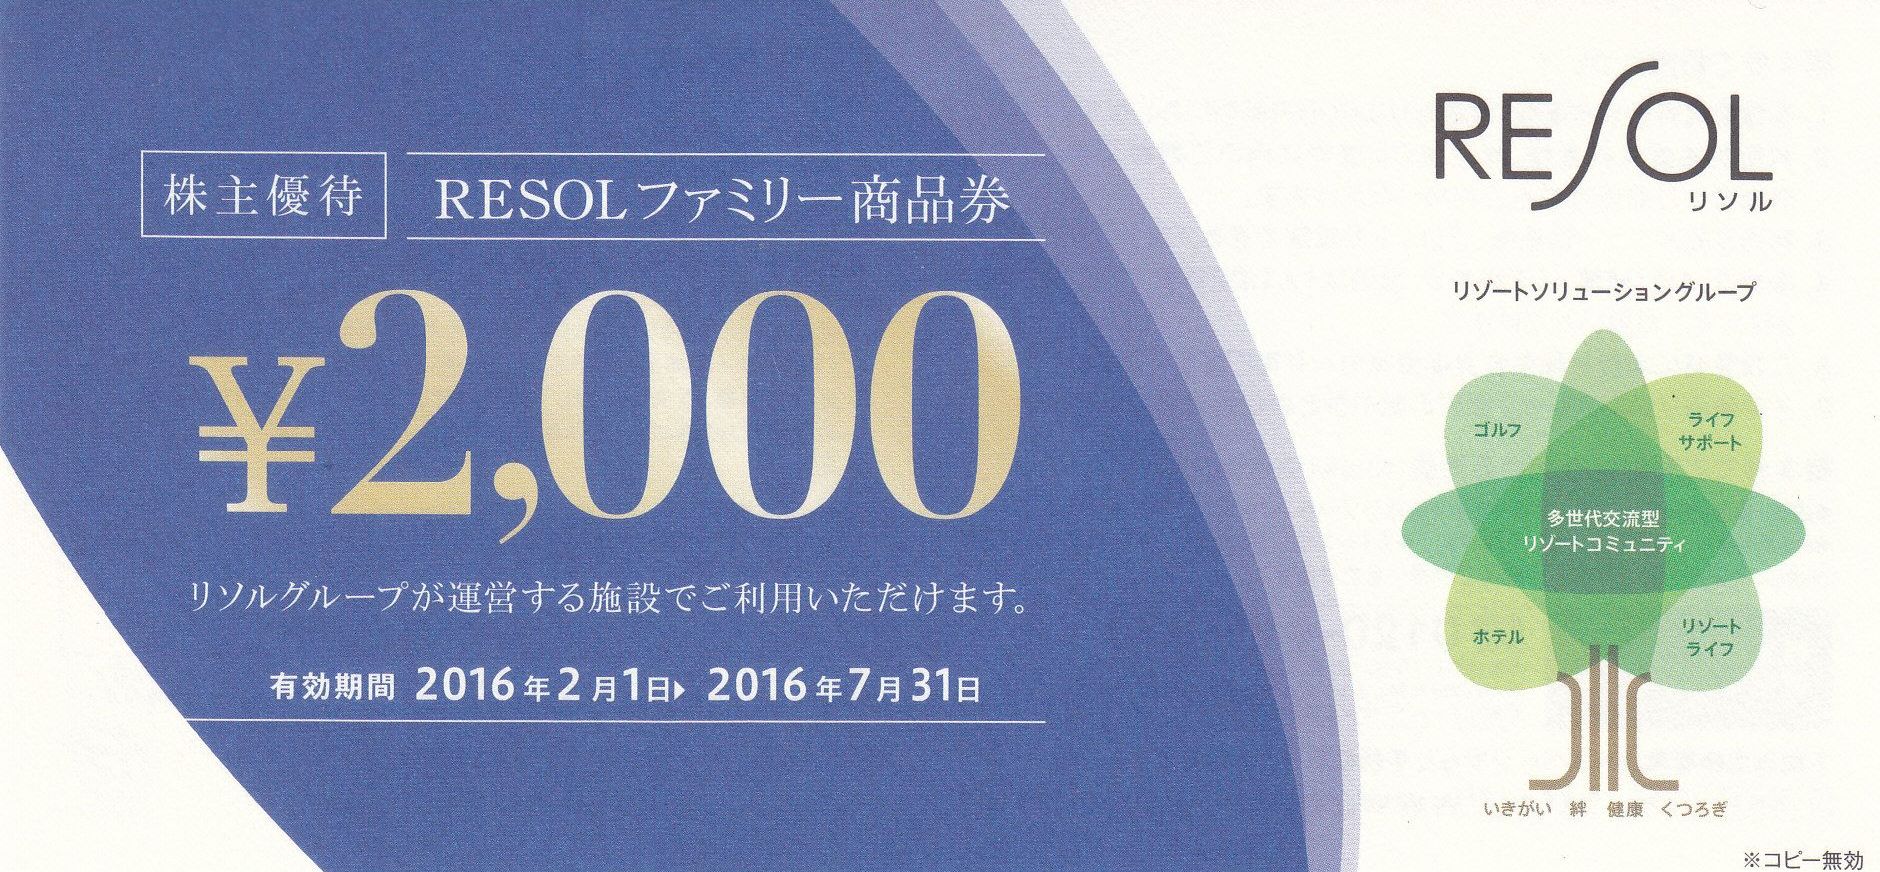 RESOL(リソル) 株主優待 ファミリー商品券 2000円分 – チケット百科事典